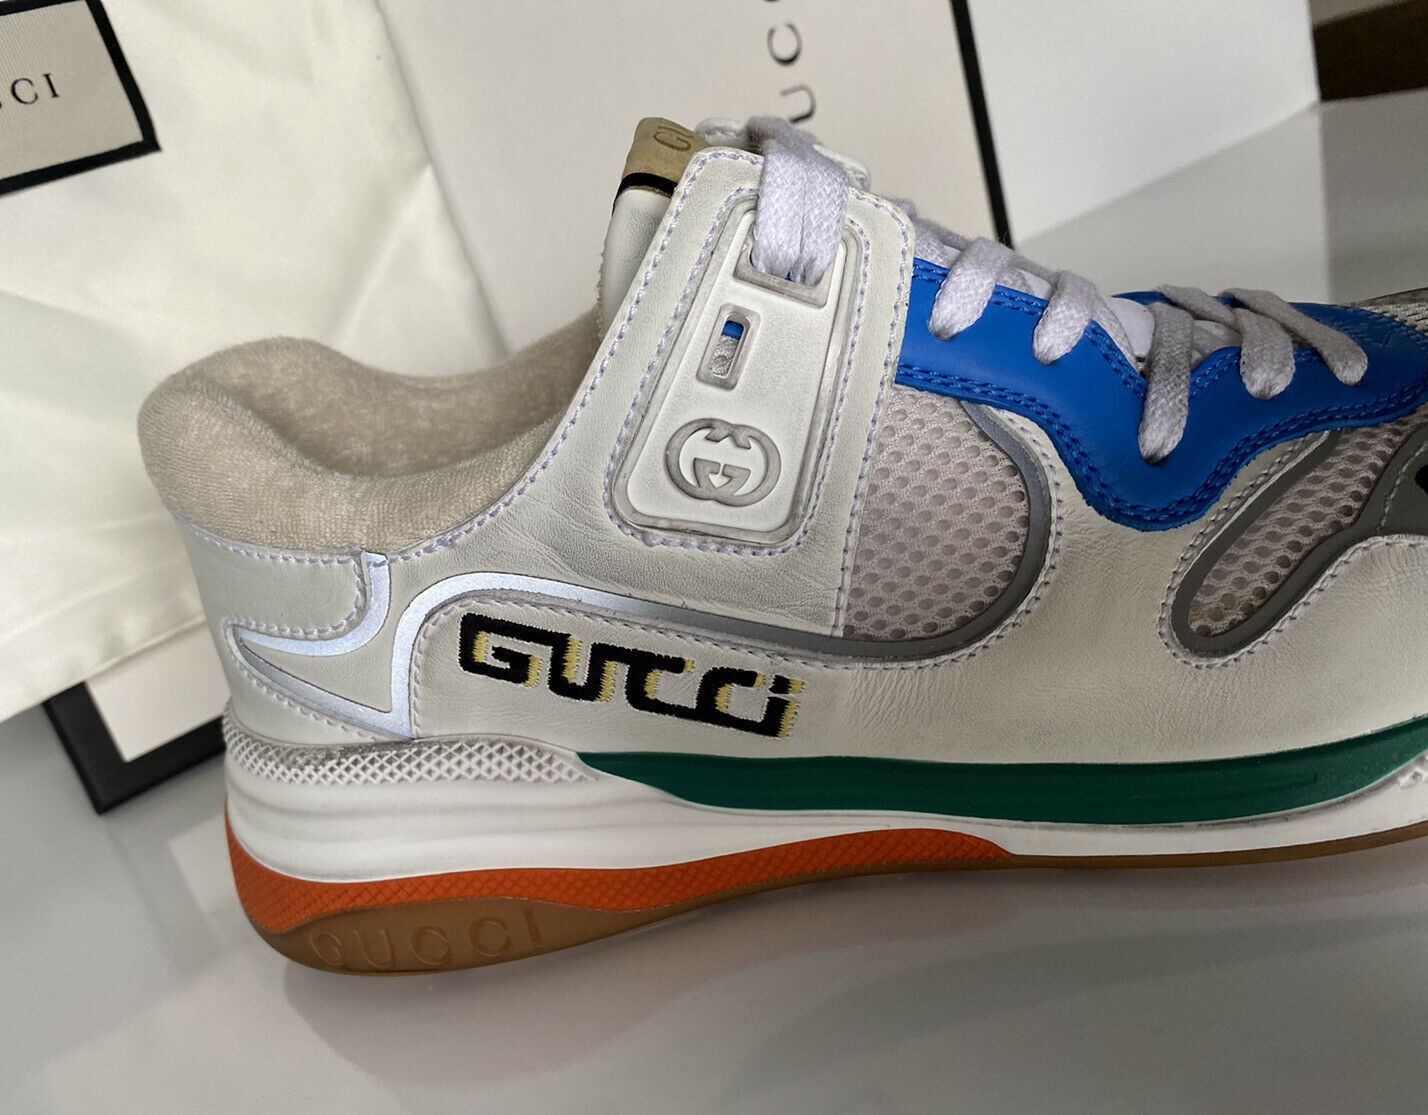 NIB Gucci Men’s Miro Soft Leather White Sneakers Shoes 9 US (Gucci 8.5) IT 92345